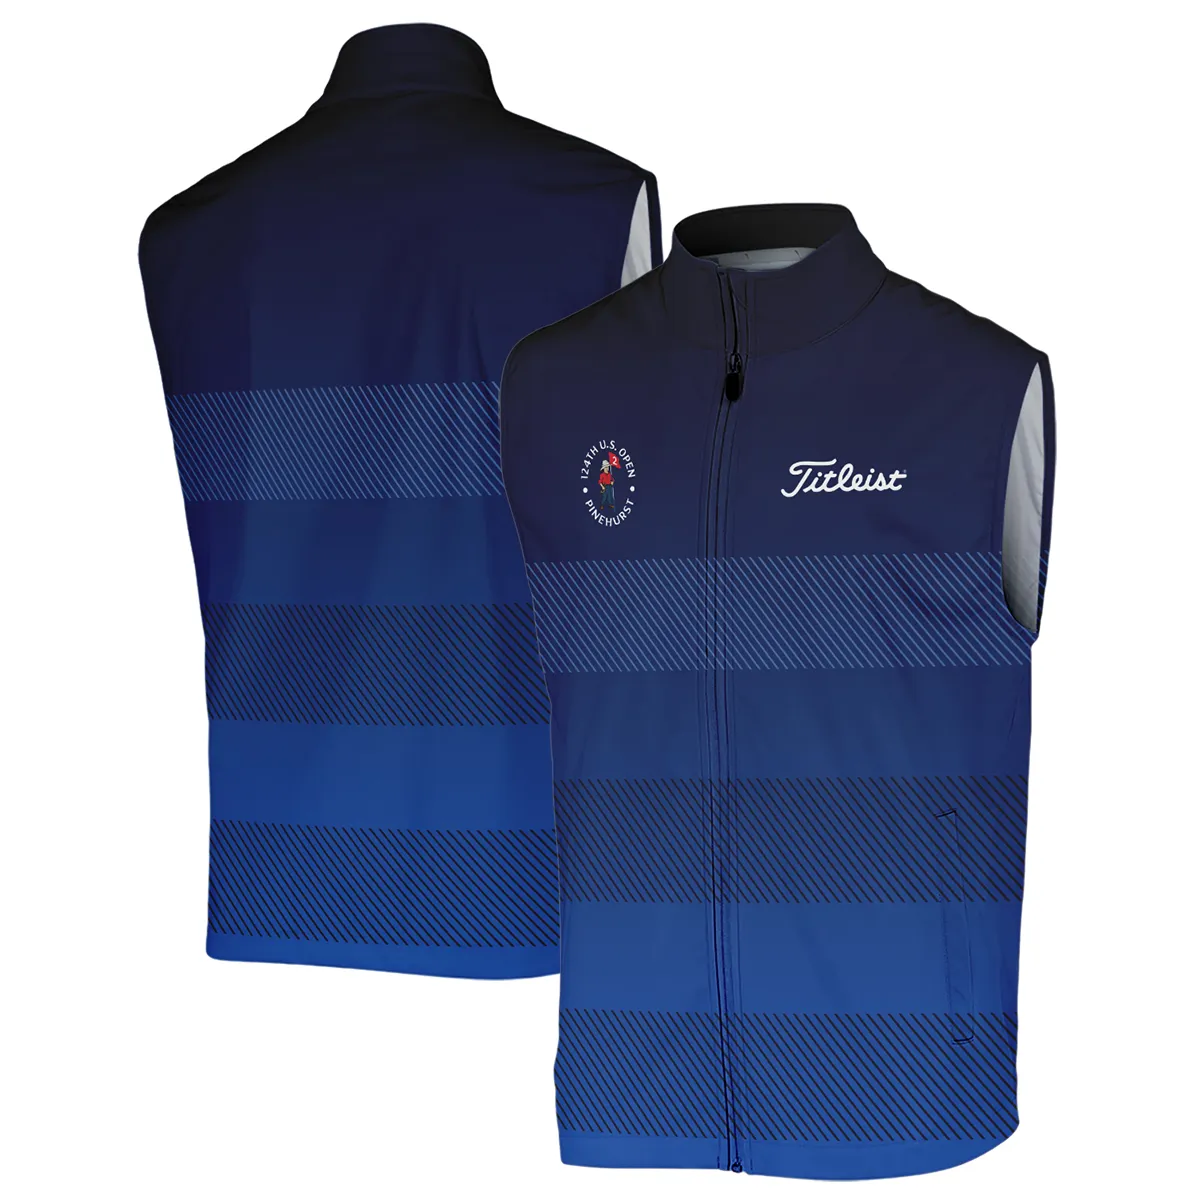 Titleist 124th U.S. Open Pinehurst Sleeveless Jacket Sports Dark Blue Gradient Striped Pattern All Over Print Sleeveless Jacket